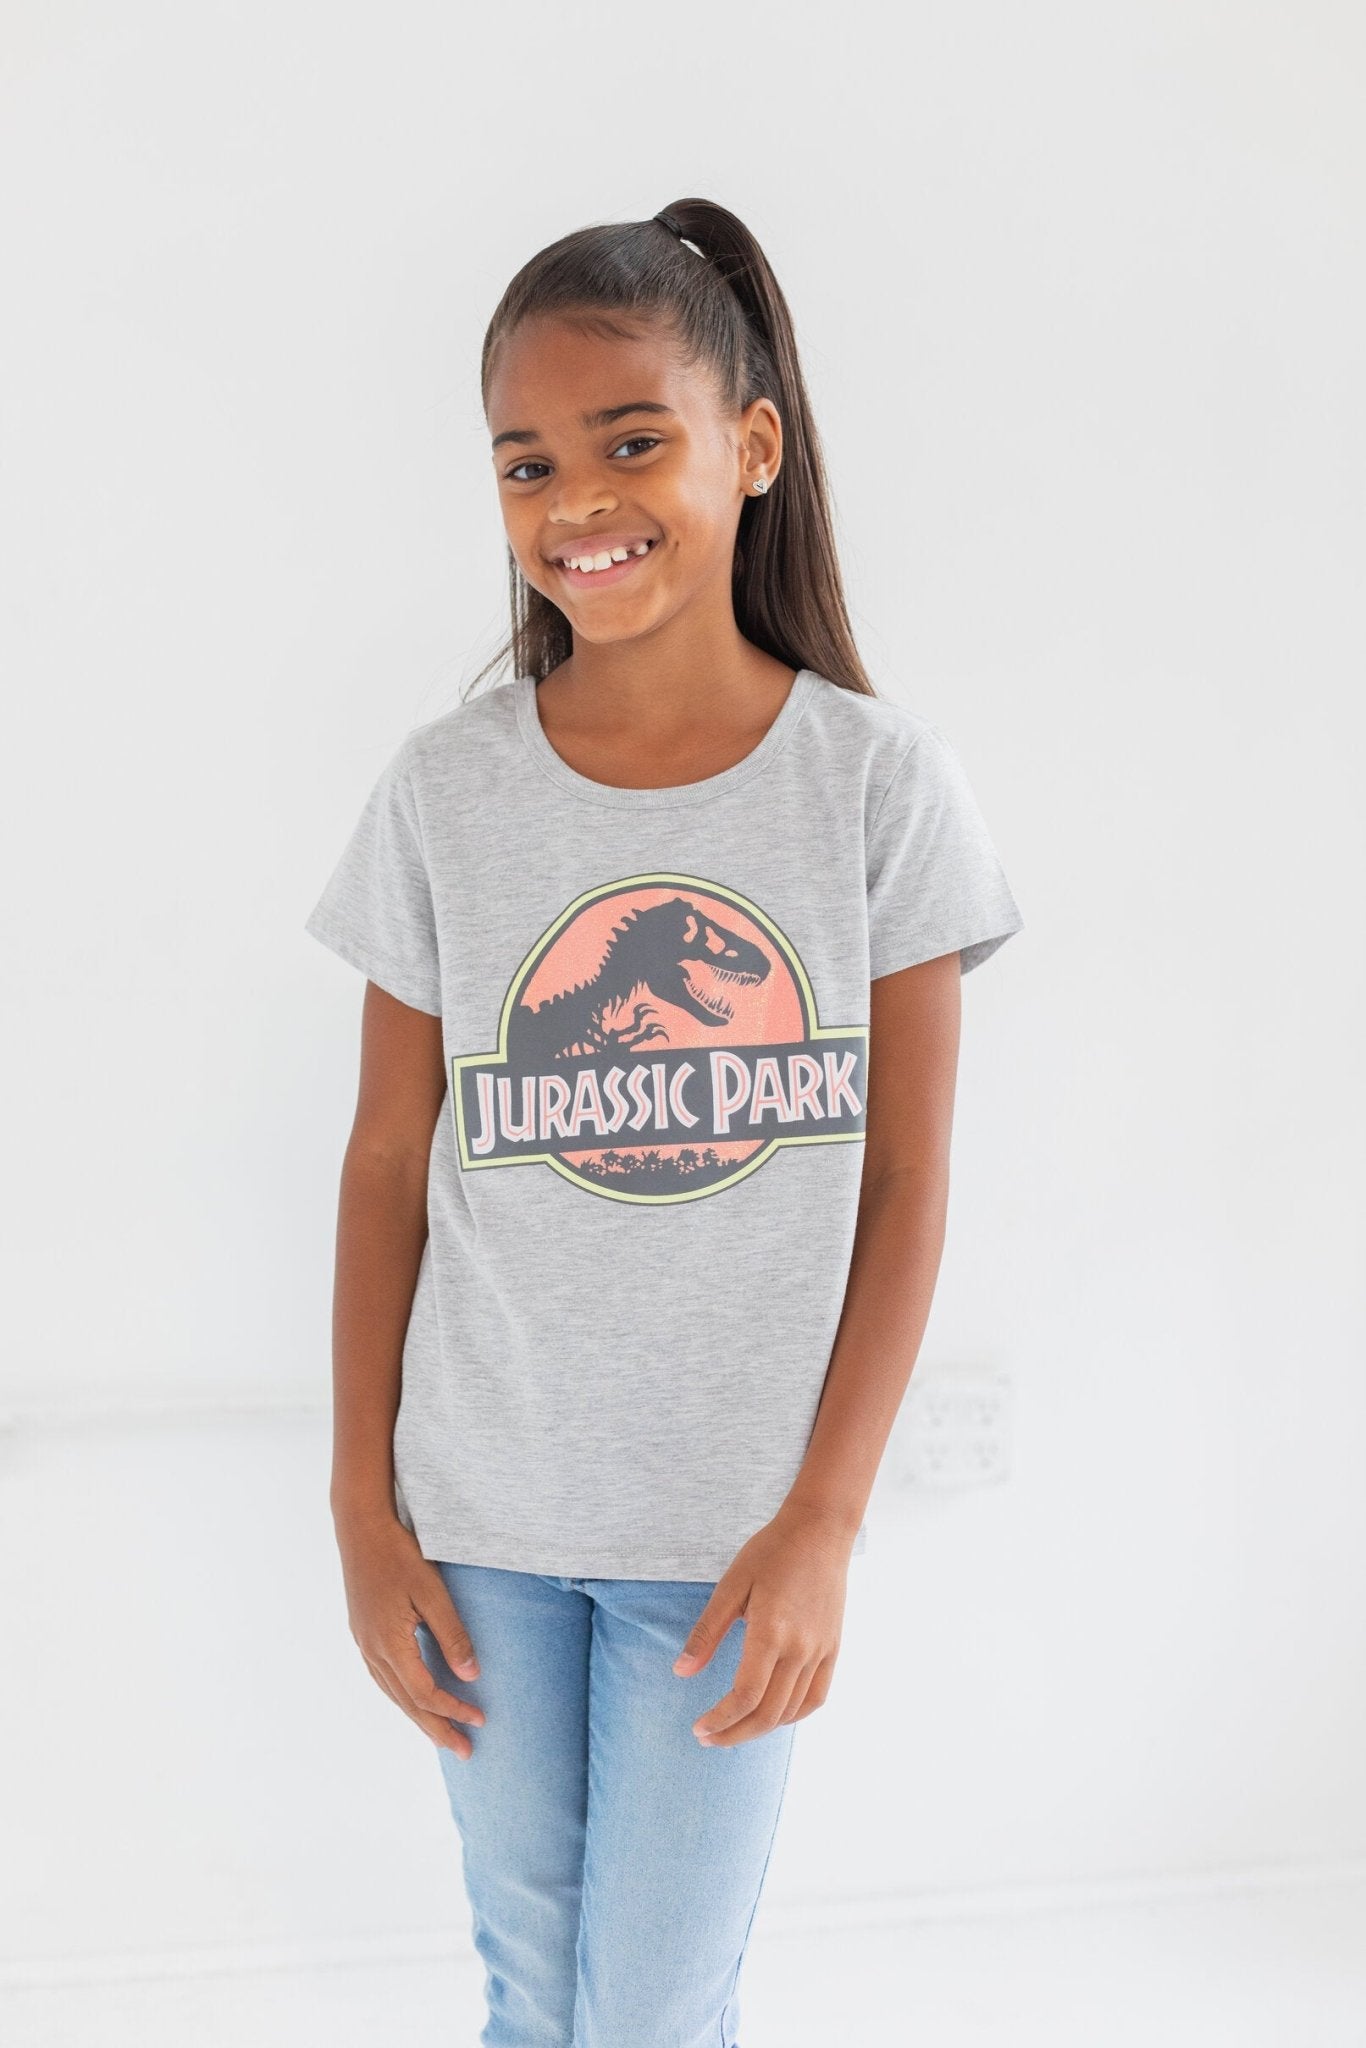 Jurassic World 3 Pack Graphic T-Shirts - imagikids